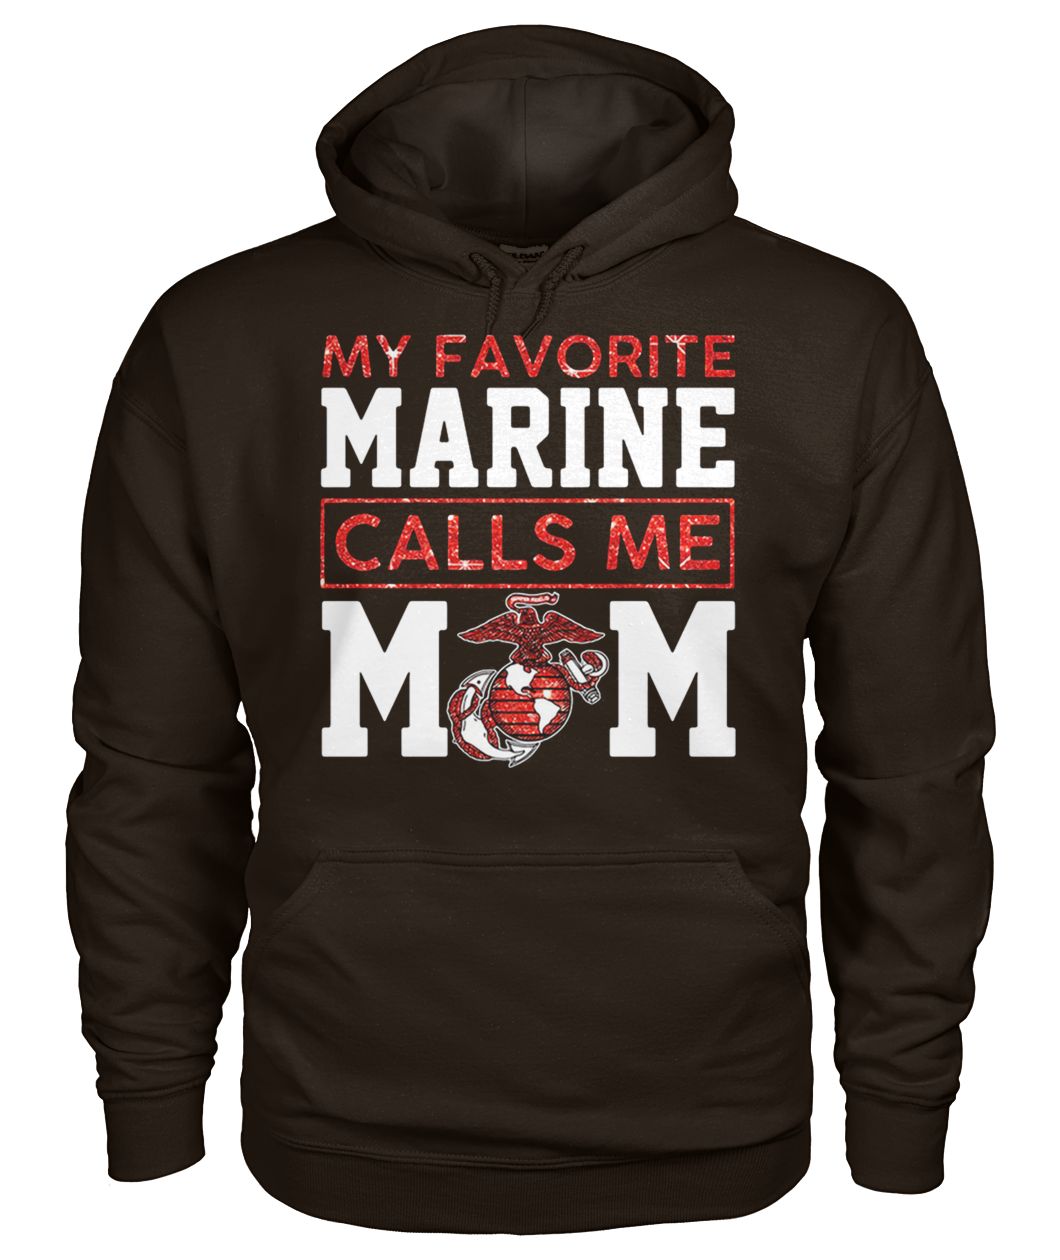 My favorite marine calls me mom gildan hoodie